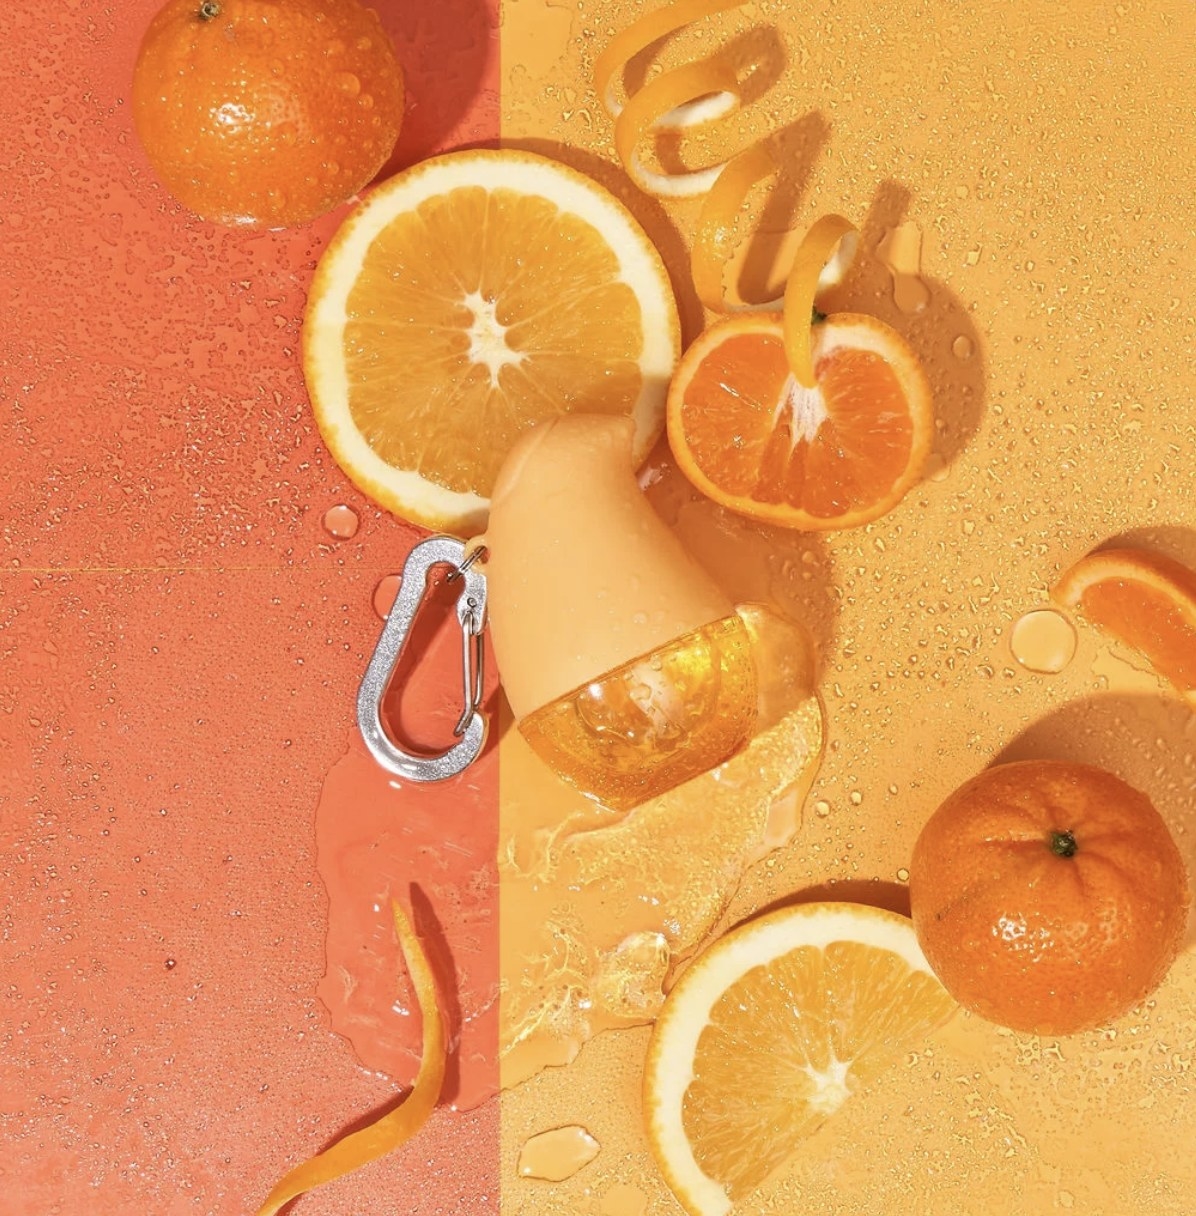 the clip on hand sanitizer in orange